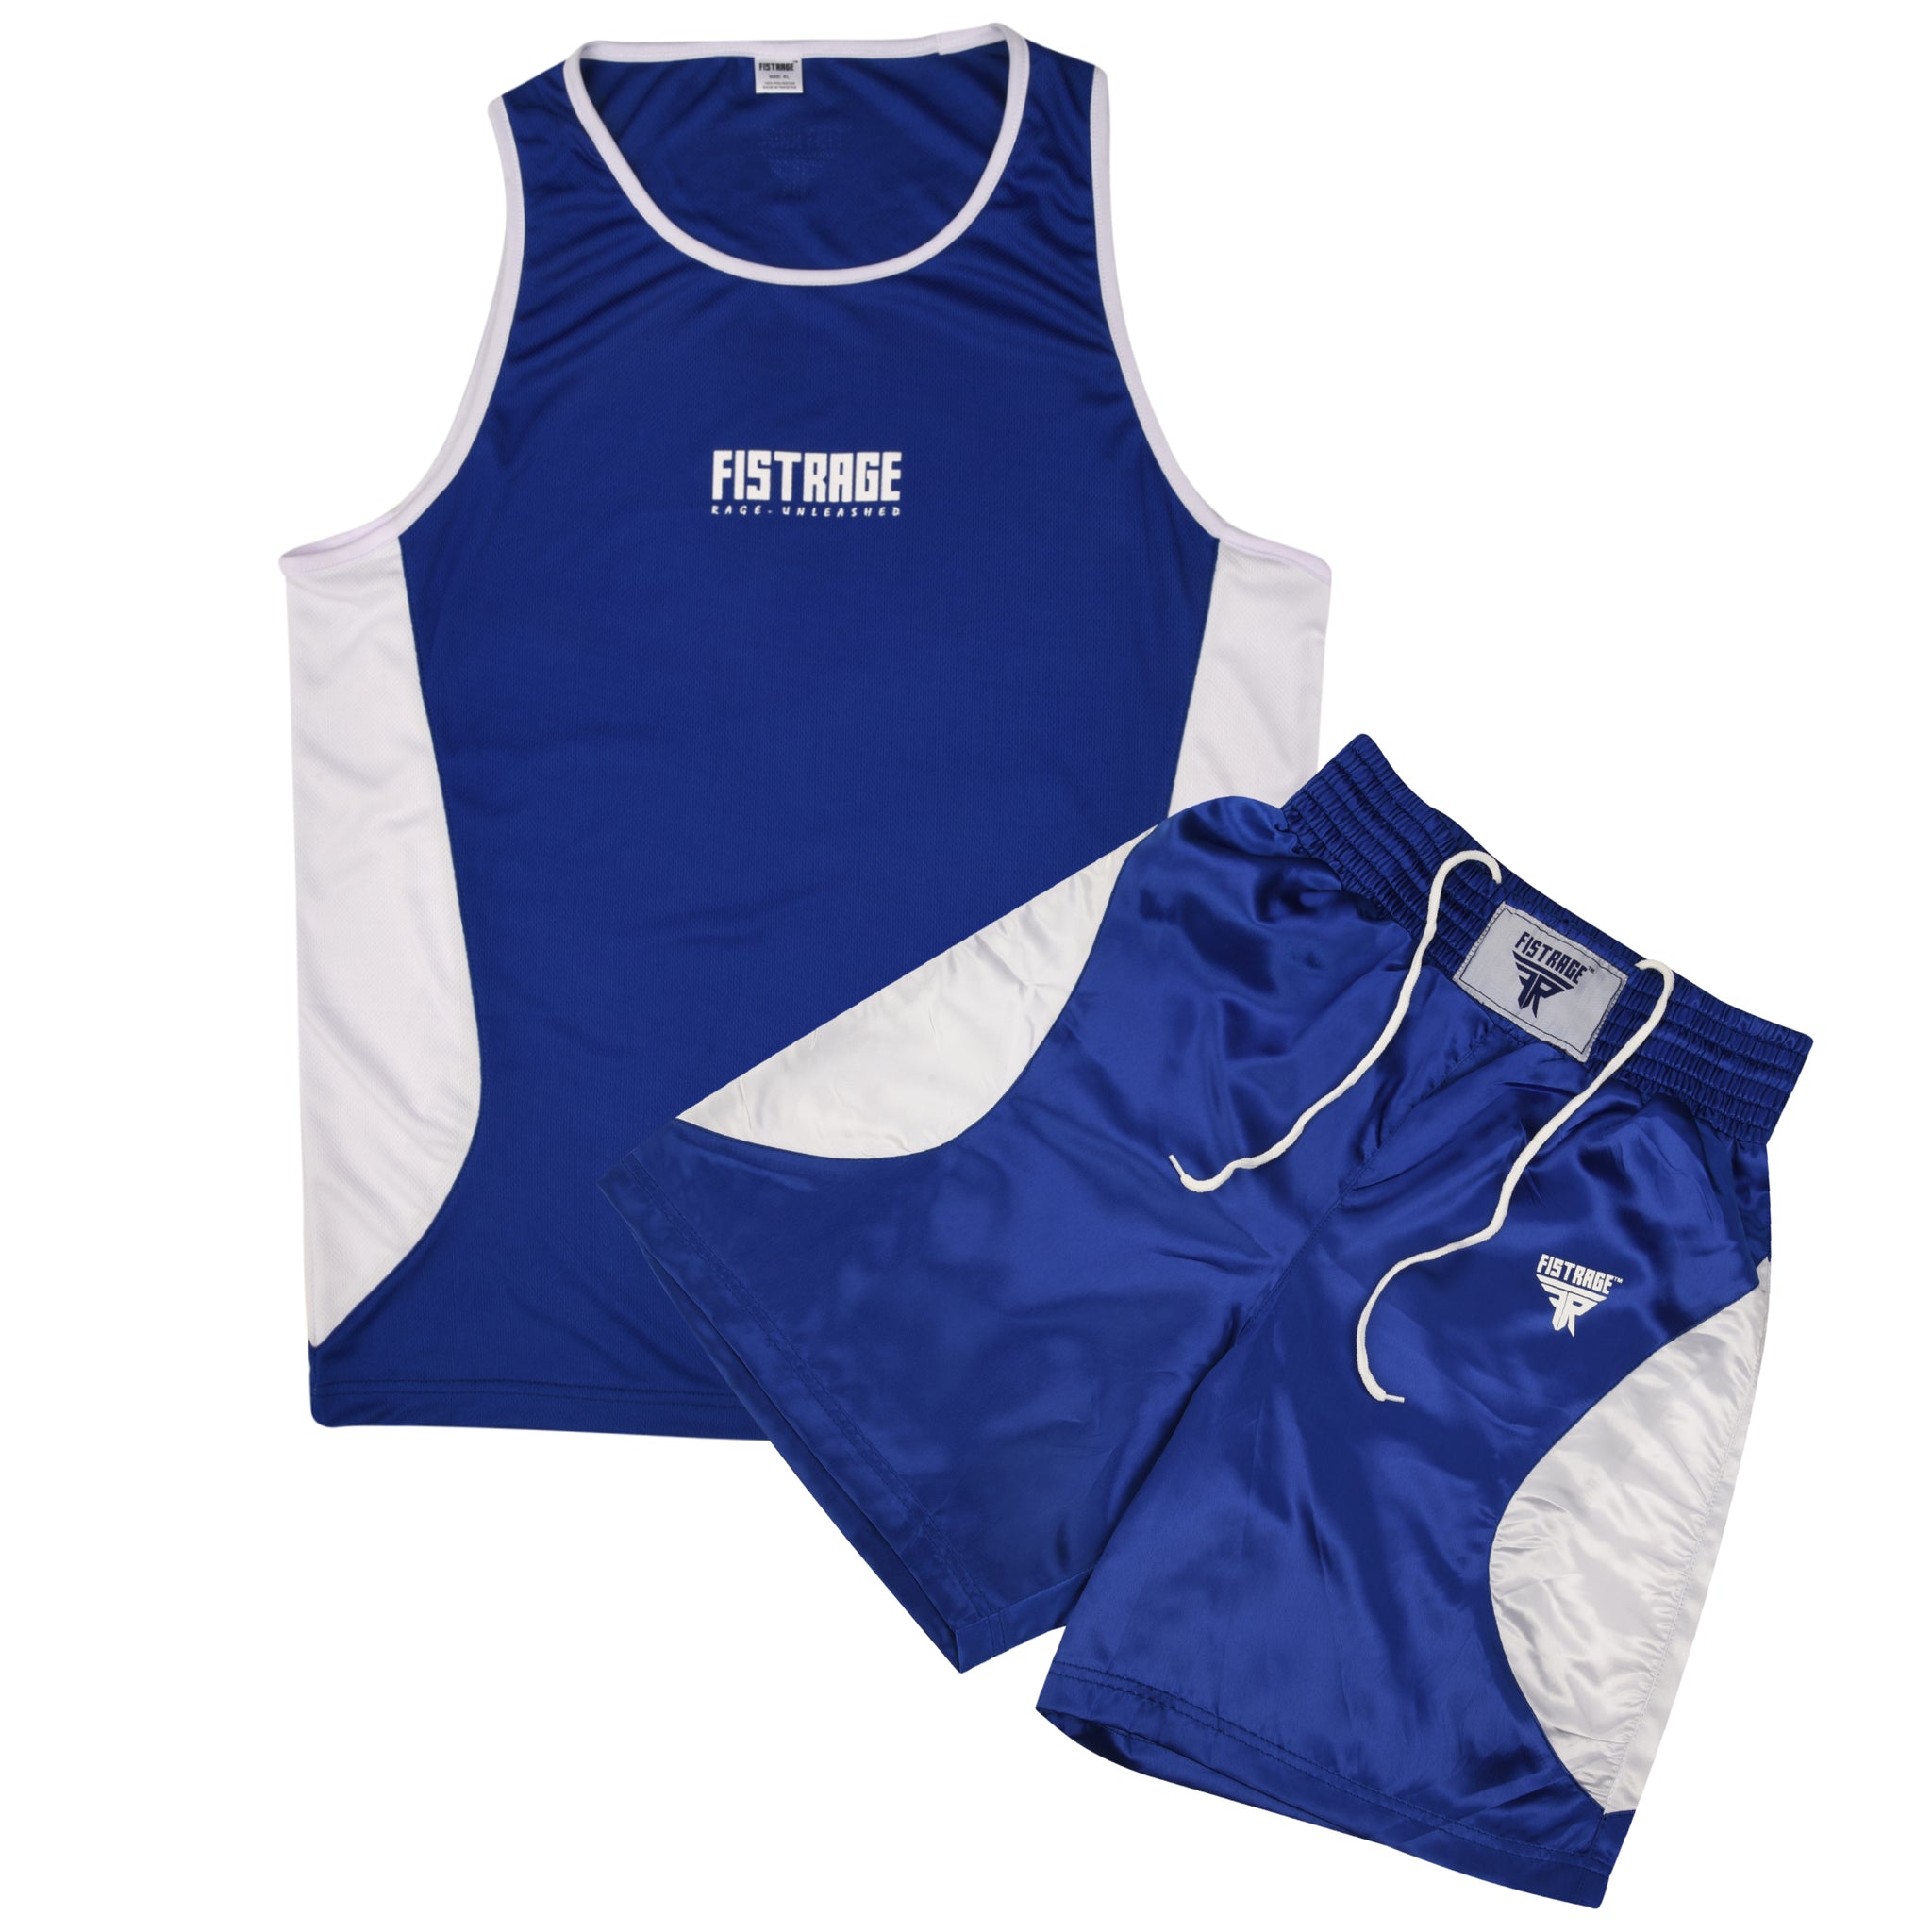 Adults Boxing Uniform Set 2PCS Top & Shorts - Blue White